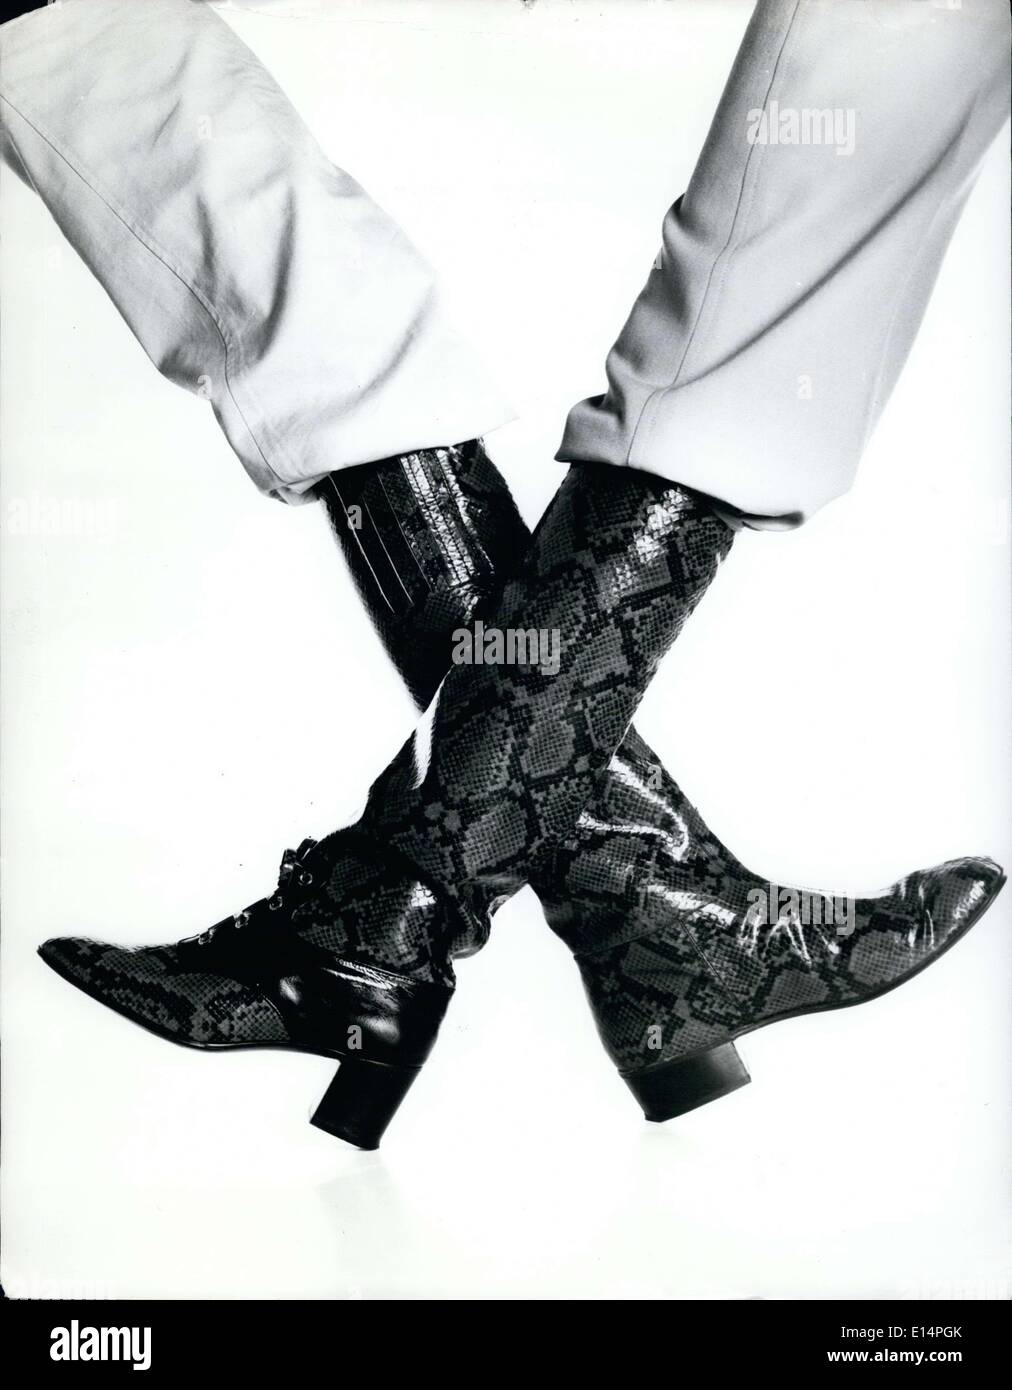 Apr. 12, 2012 - Men's Women's Lizard Skin Cossack Boots Fall Stock Photo